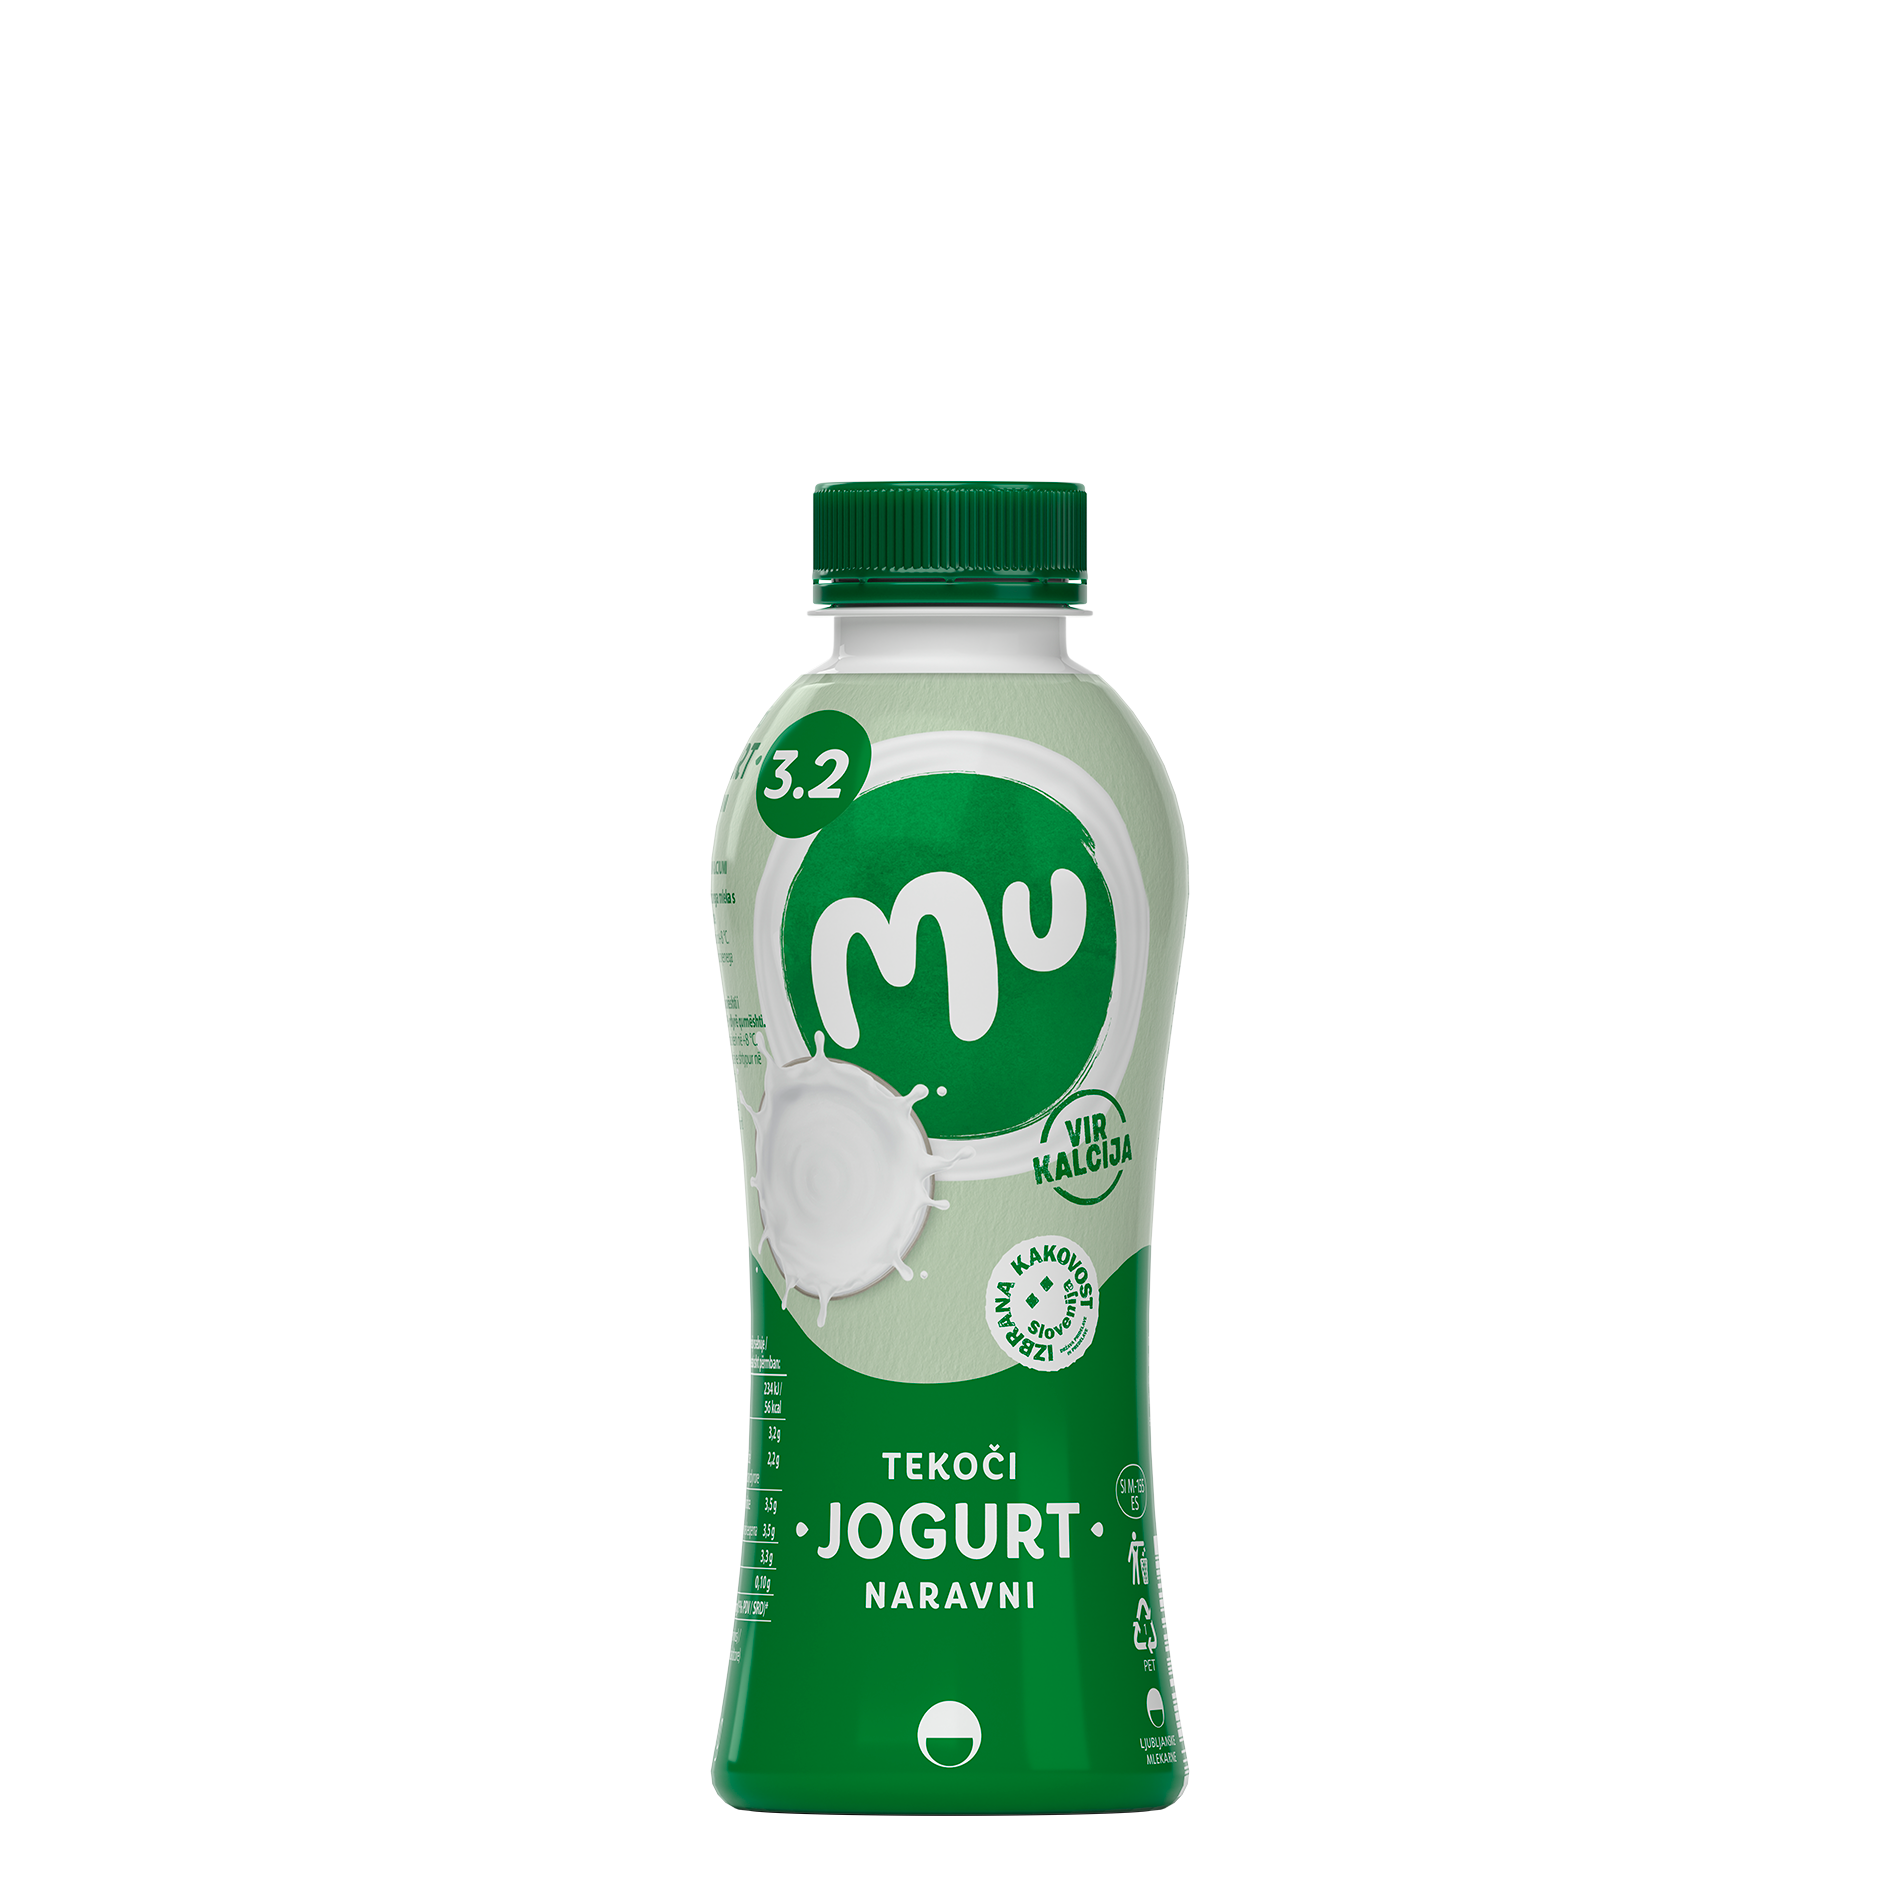 Mu natural drinking yoghurt with 3,2 % milk fat; plastic bottle